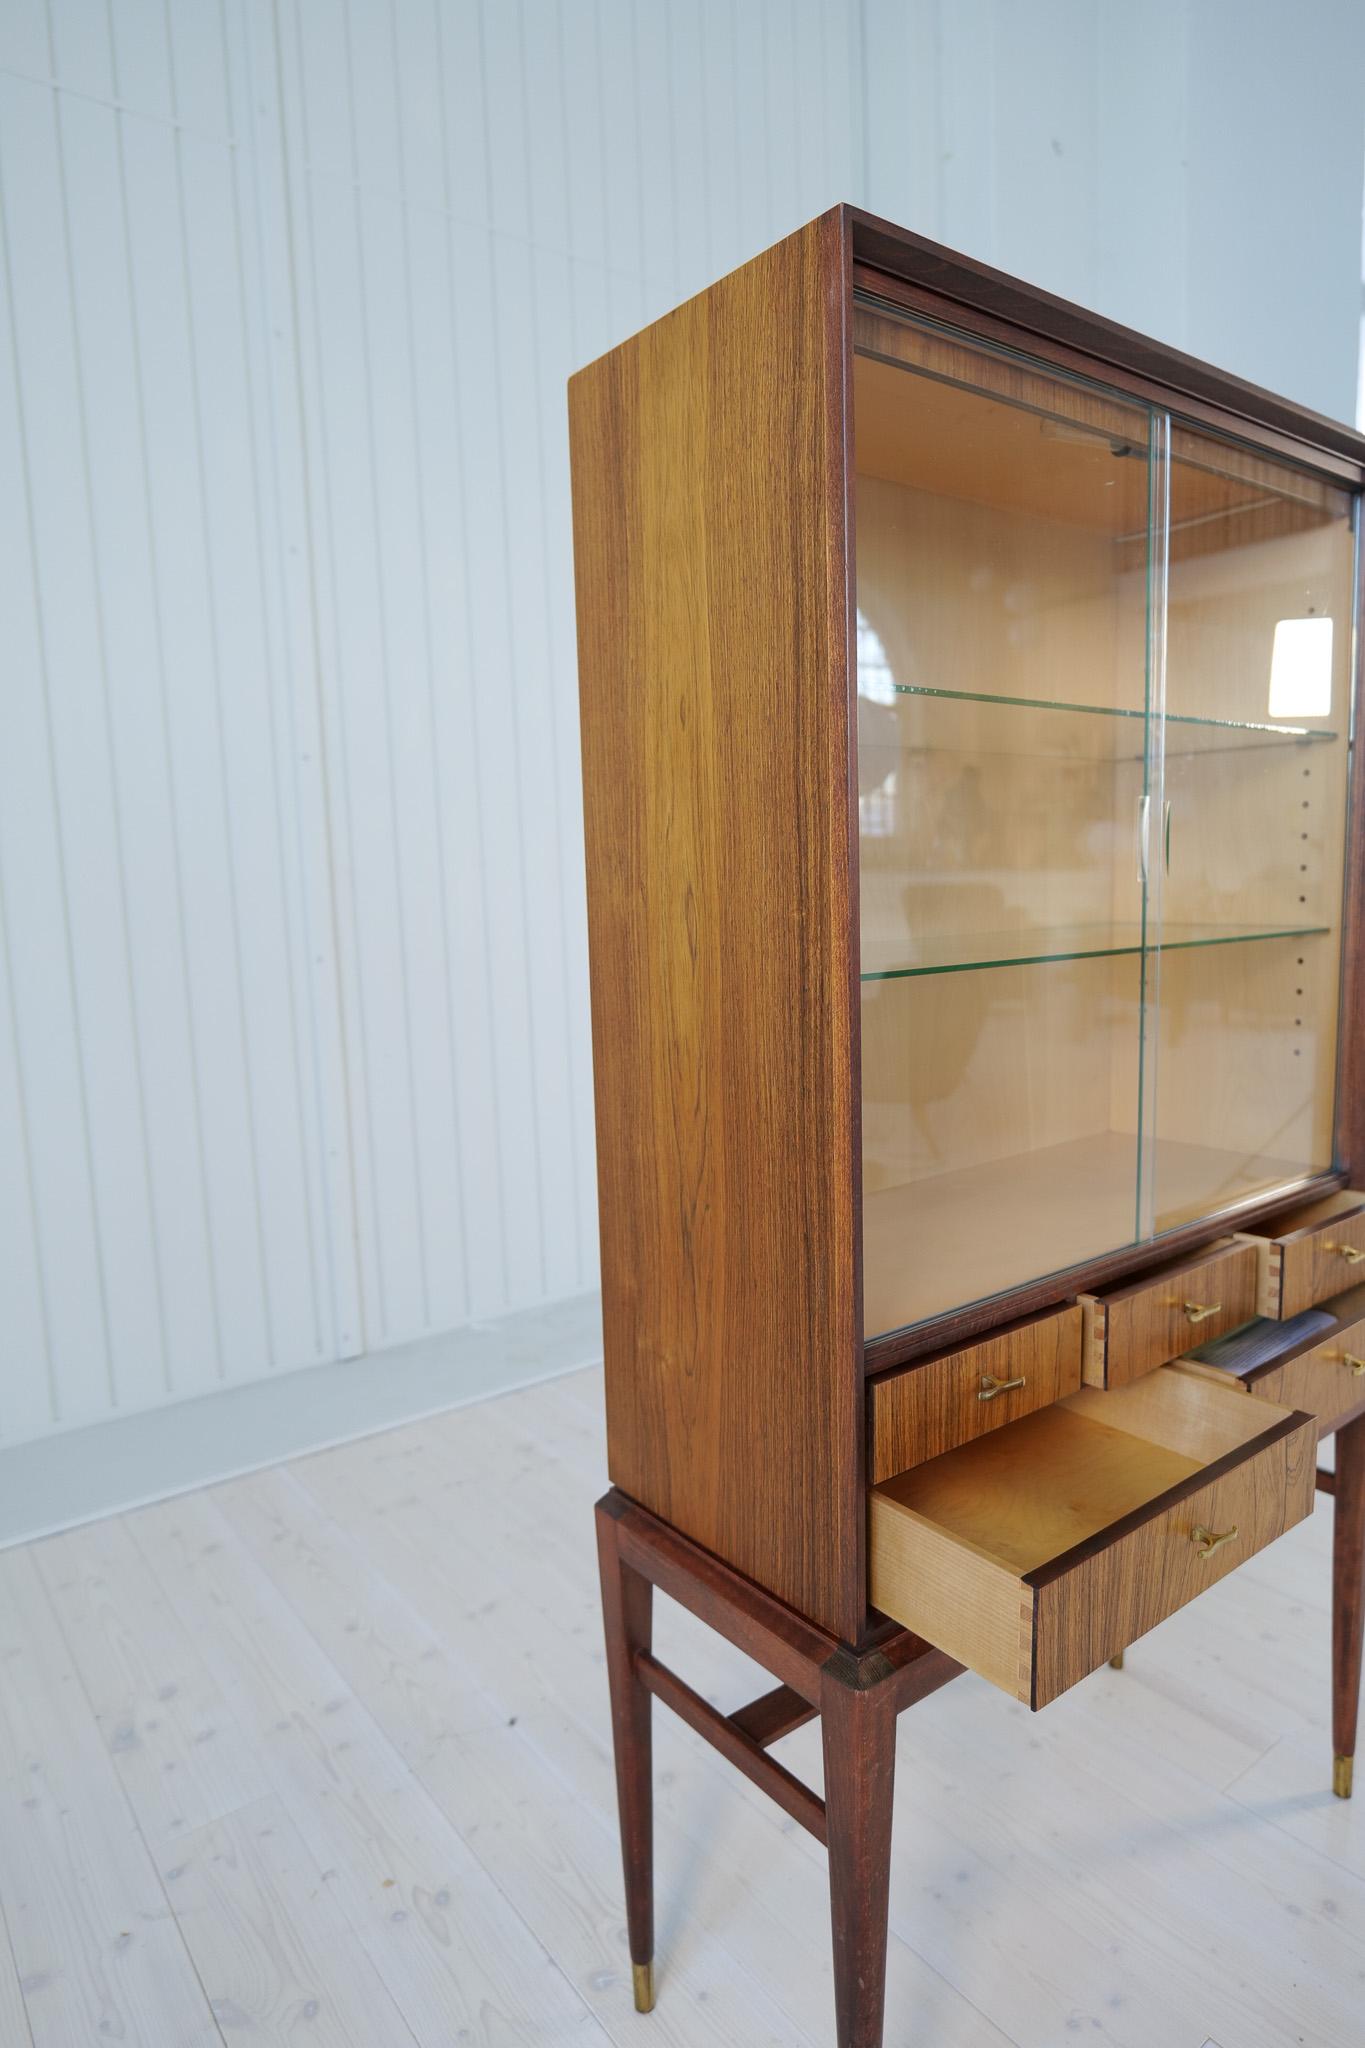 Rosewood Midcentury Modern Cabinet by Svante Skogh for Seffle Möbelfabrik, Sweden